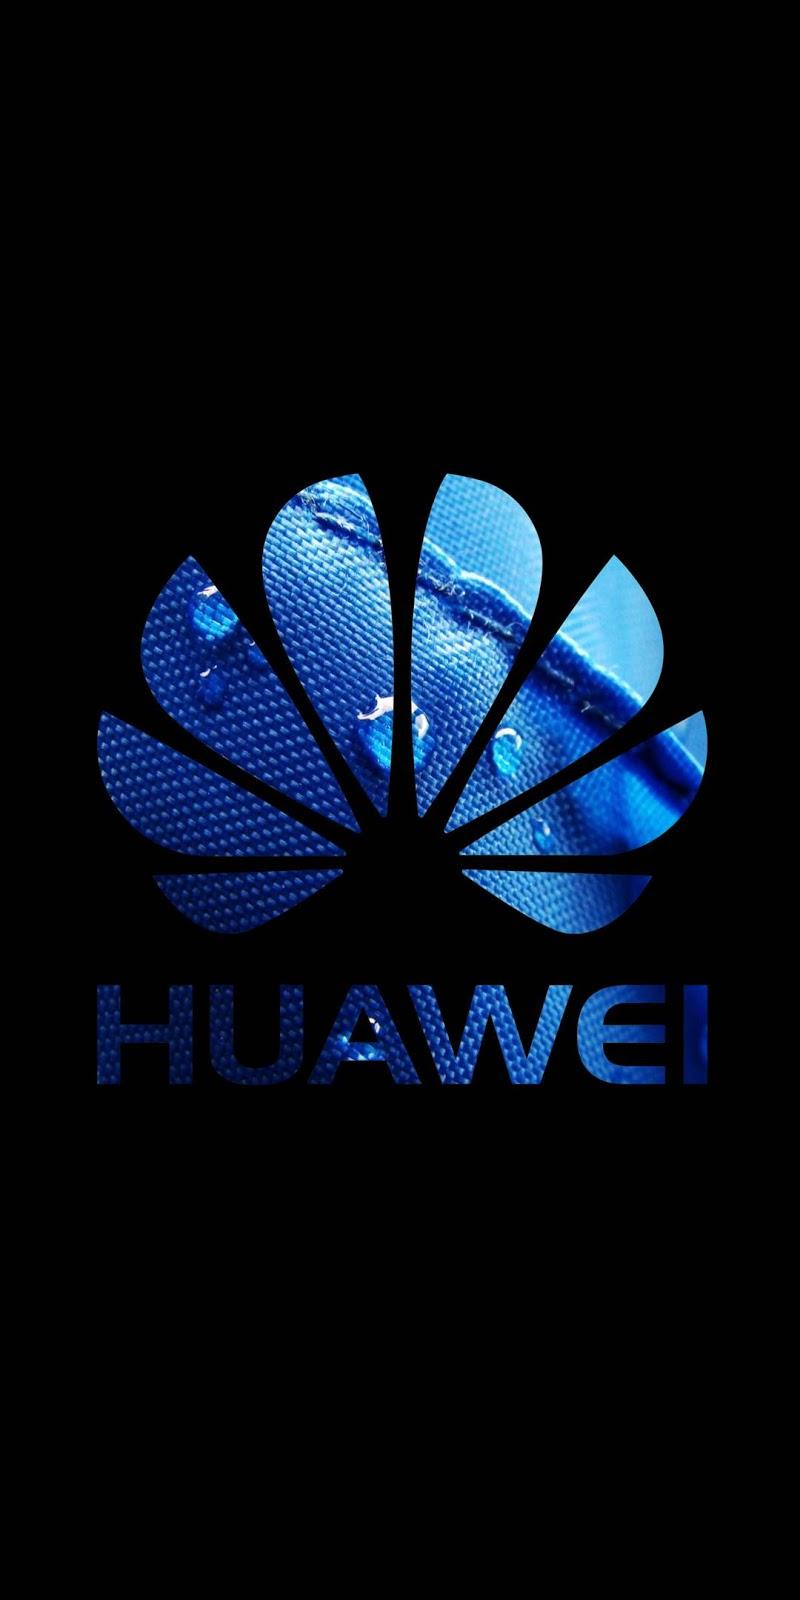 Phone Brand Logo Wallpaper HD